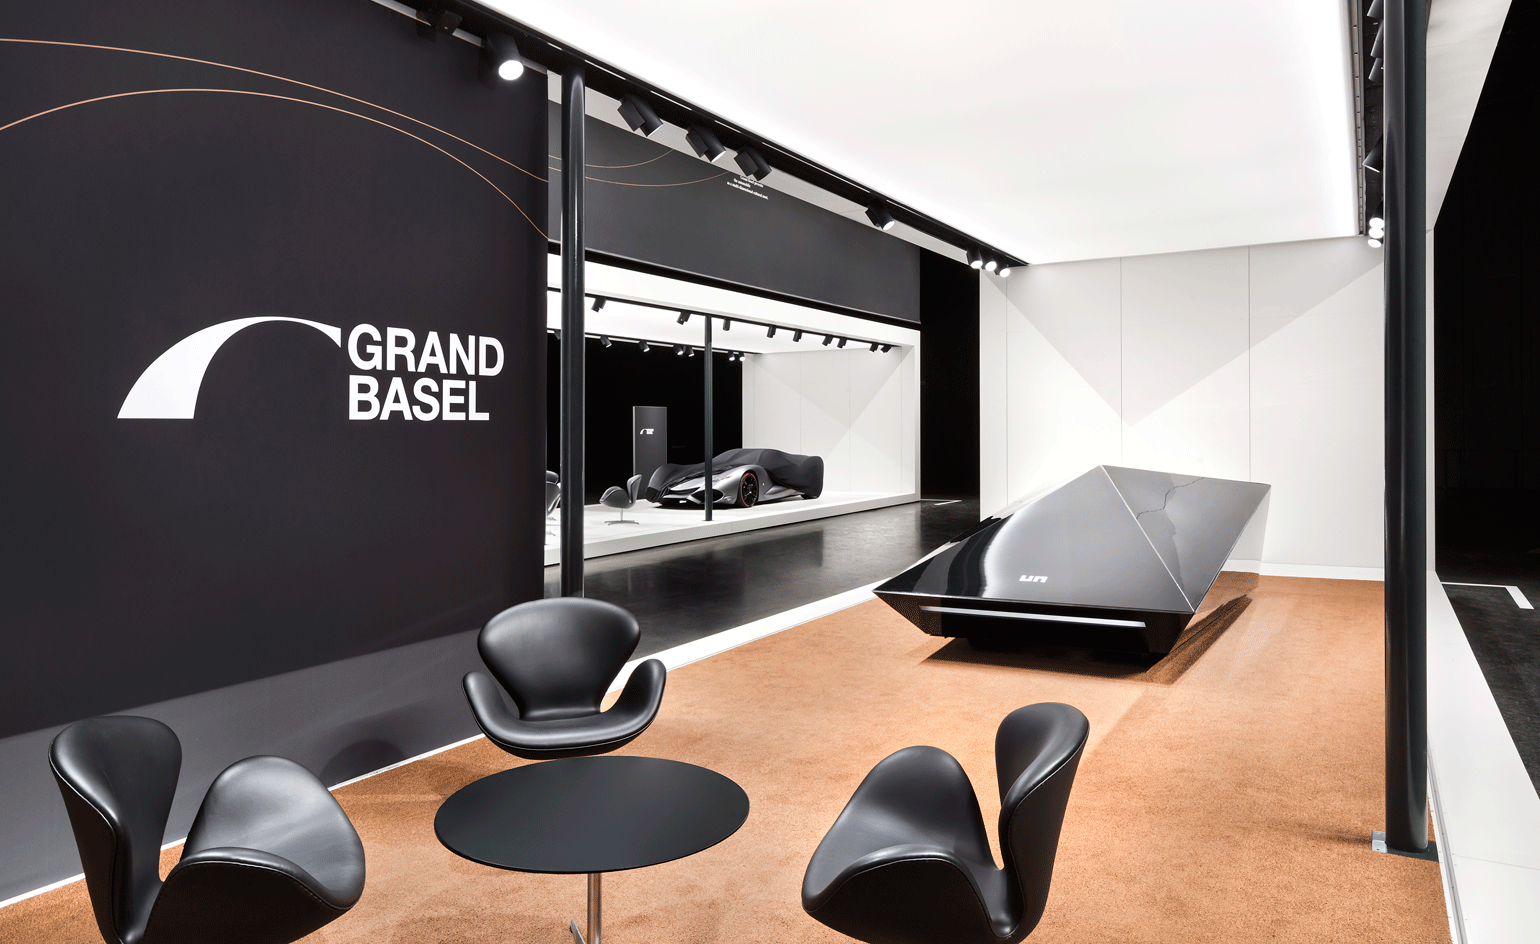 Grand Basel 2017